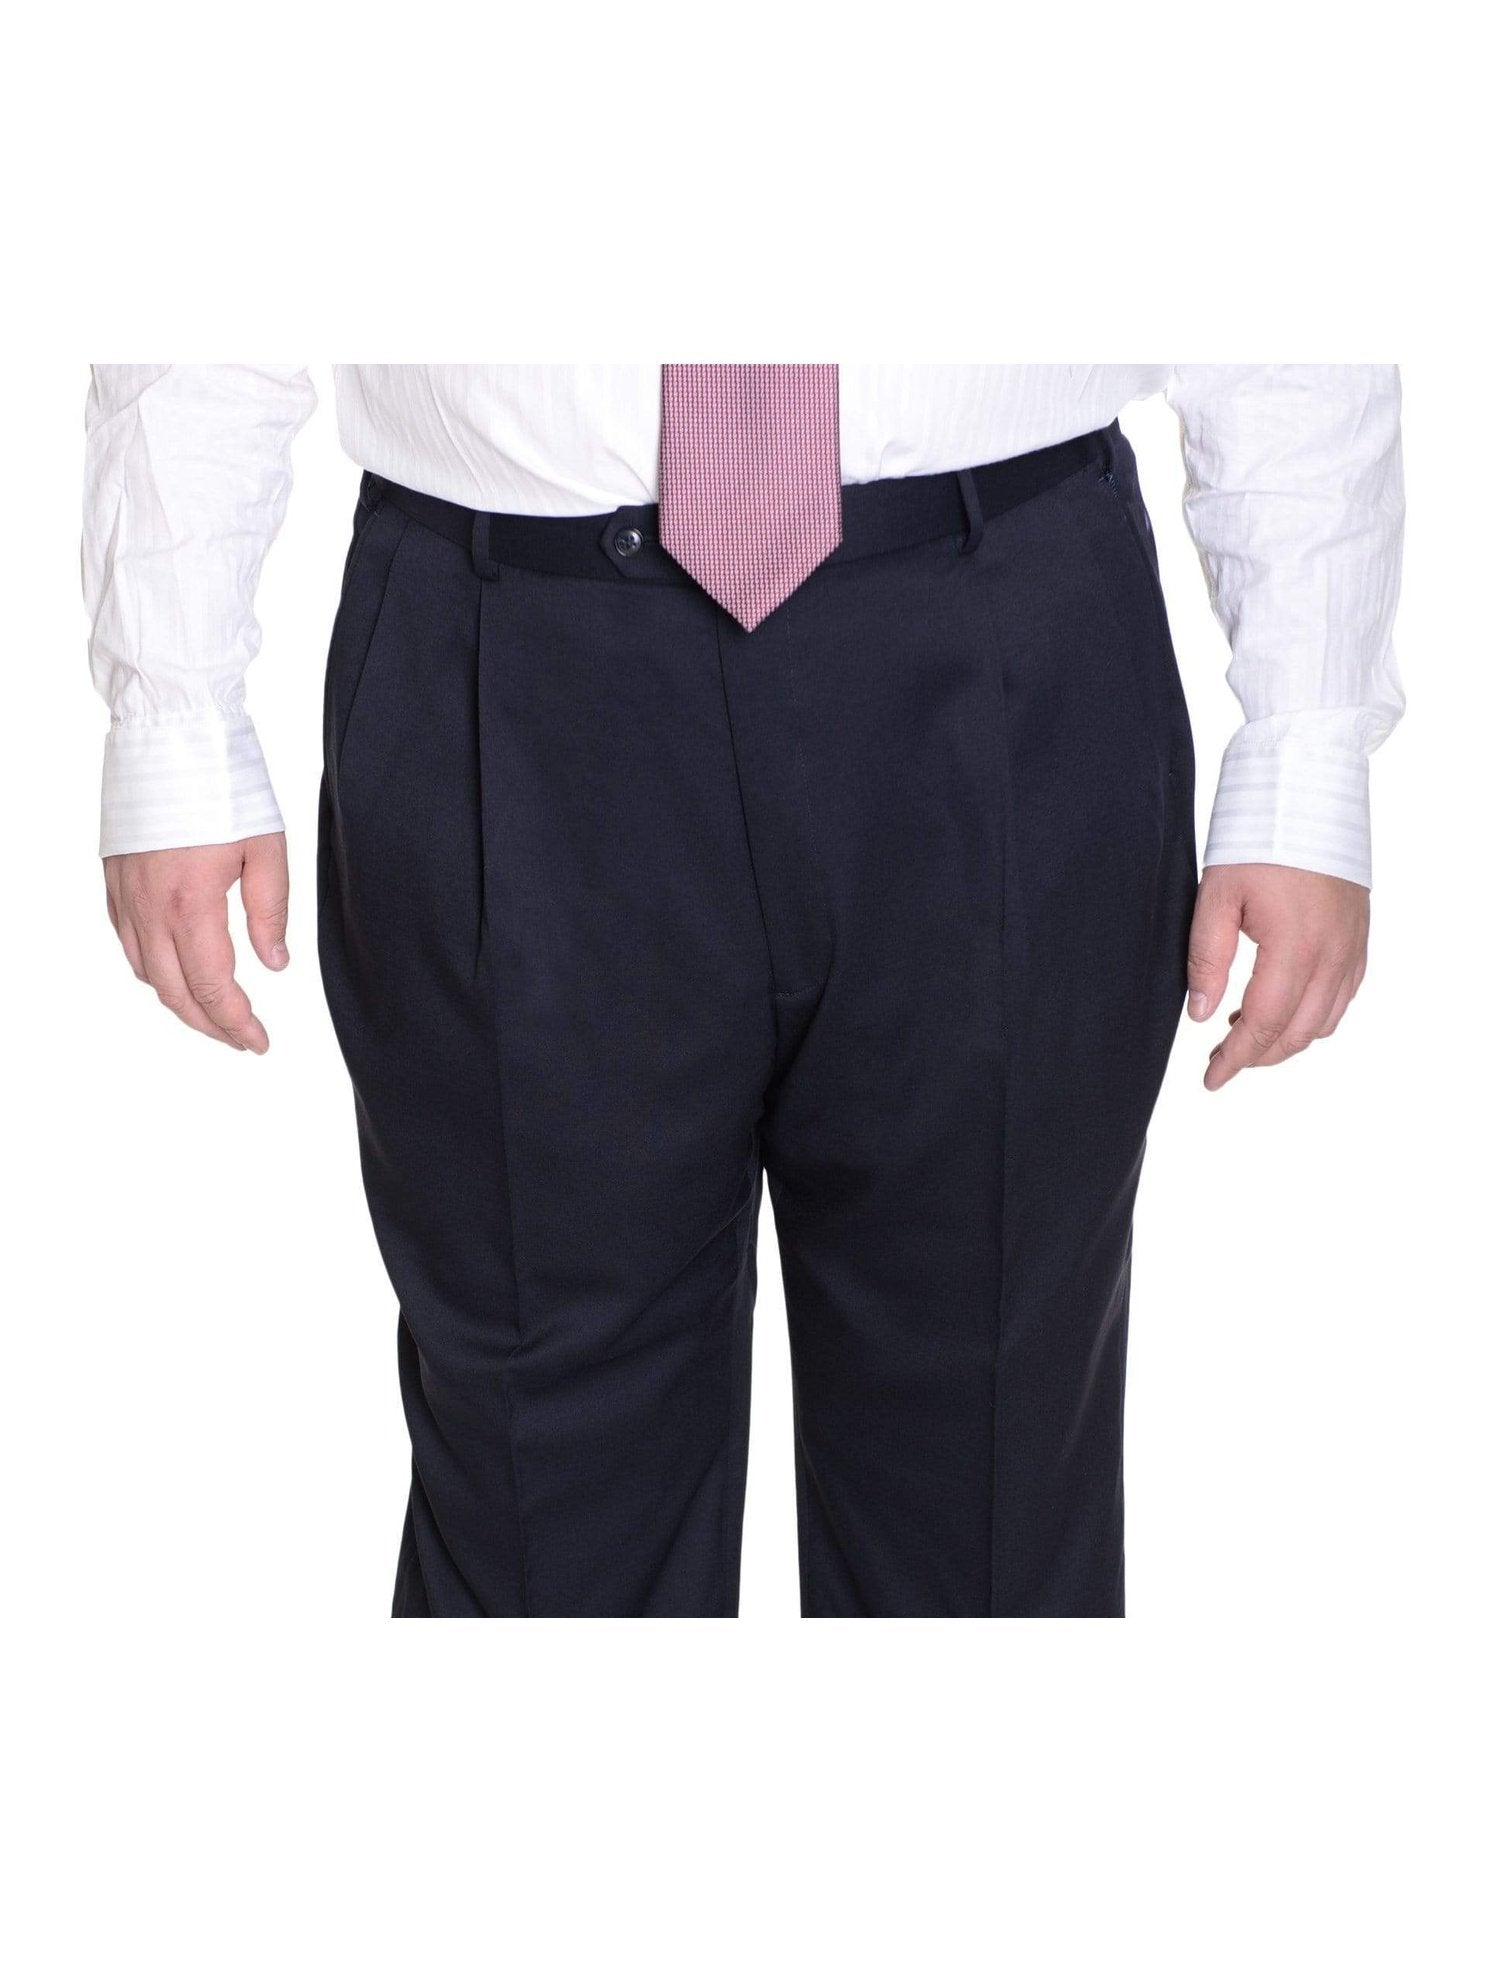 Modern Fit Navy Wool Dress Pants - Benjamin's Menswear